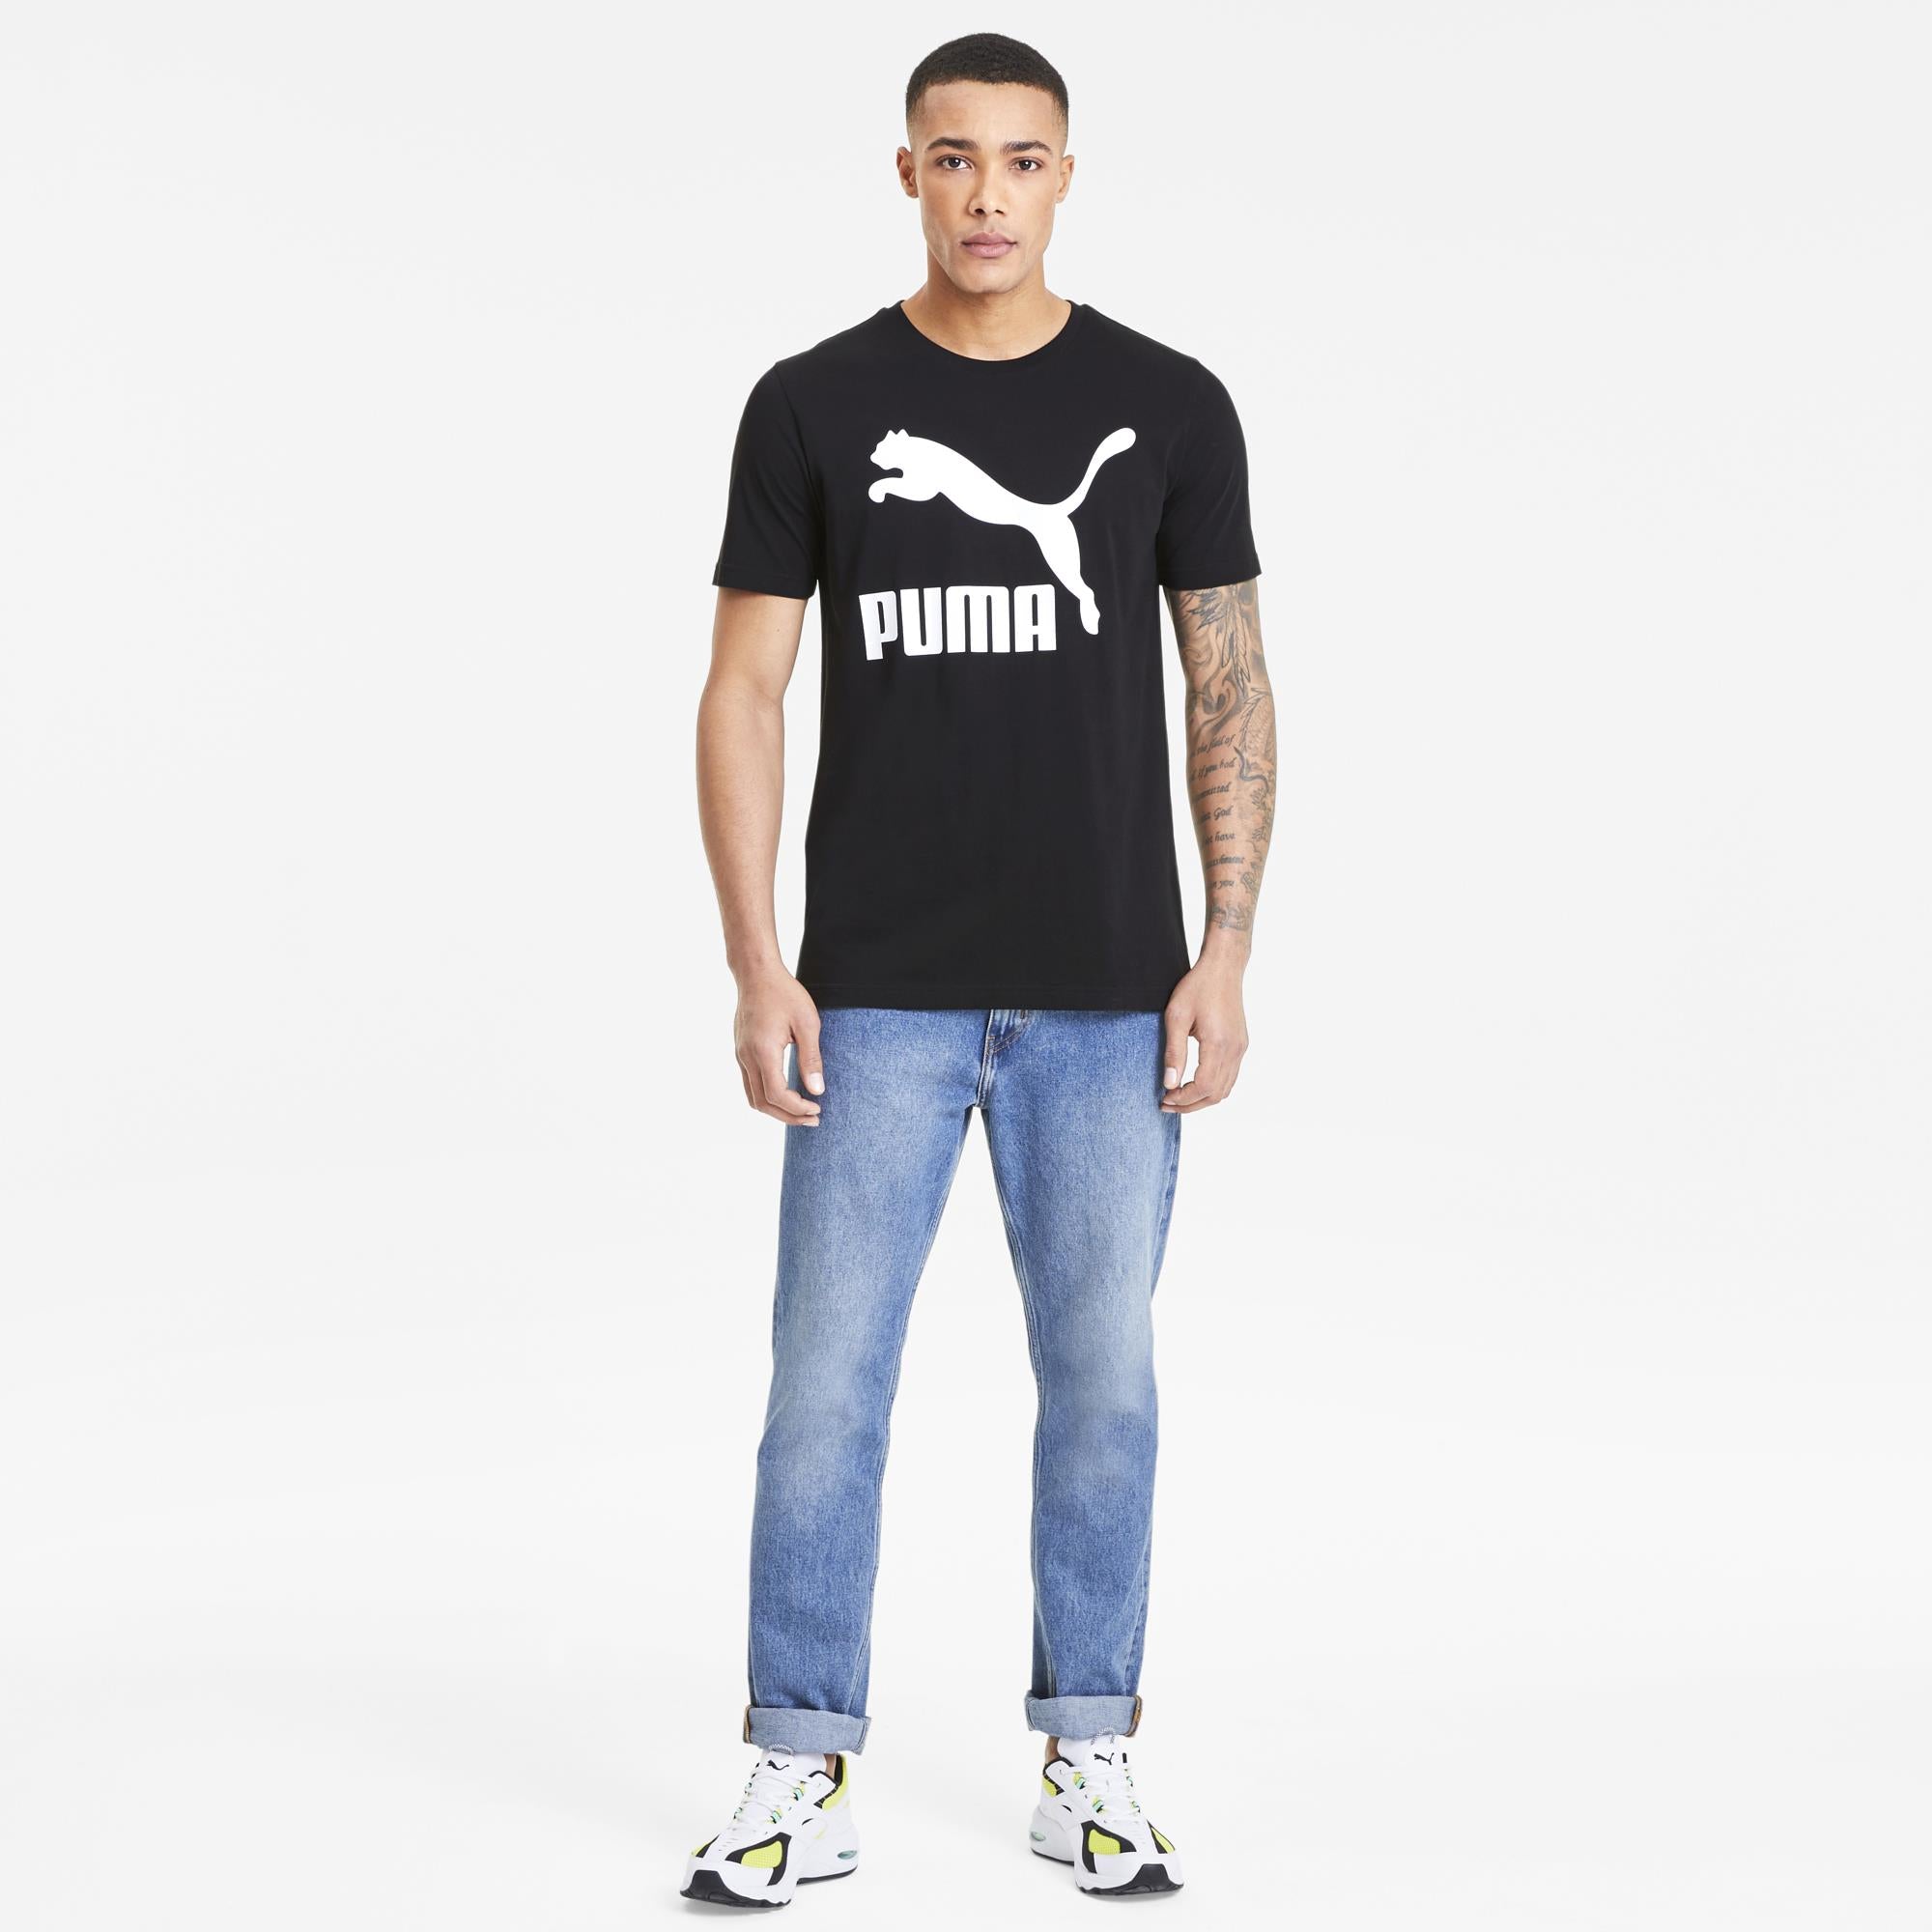 Puma T-shirt Homme